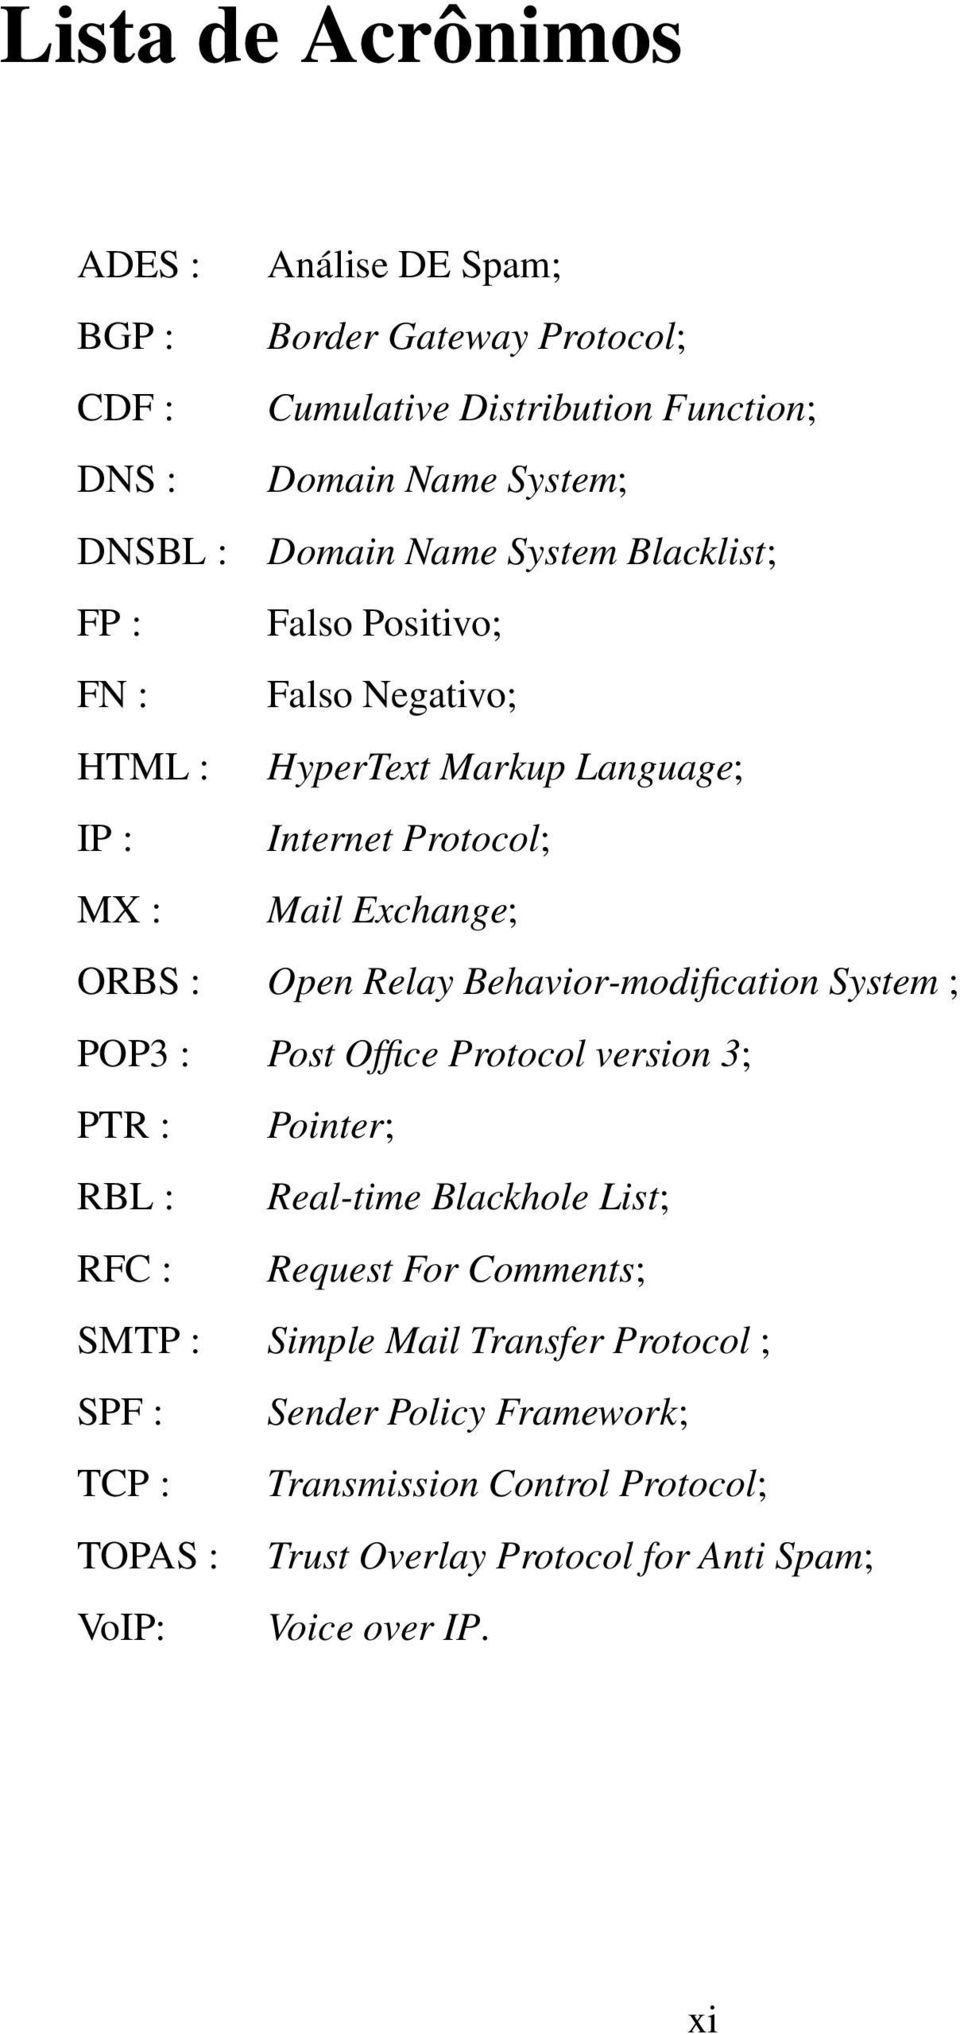 Behavior-modification System ; POP3 : Post Office Protocol version 3; PTR : Pointer; RBL : Real-time Blackhole List; RFC : Request For Comments; SMTP : Simple